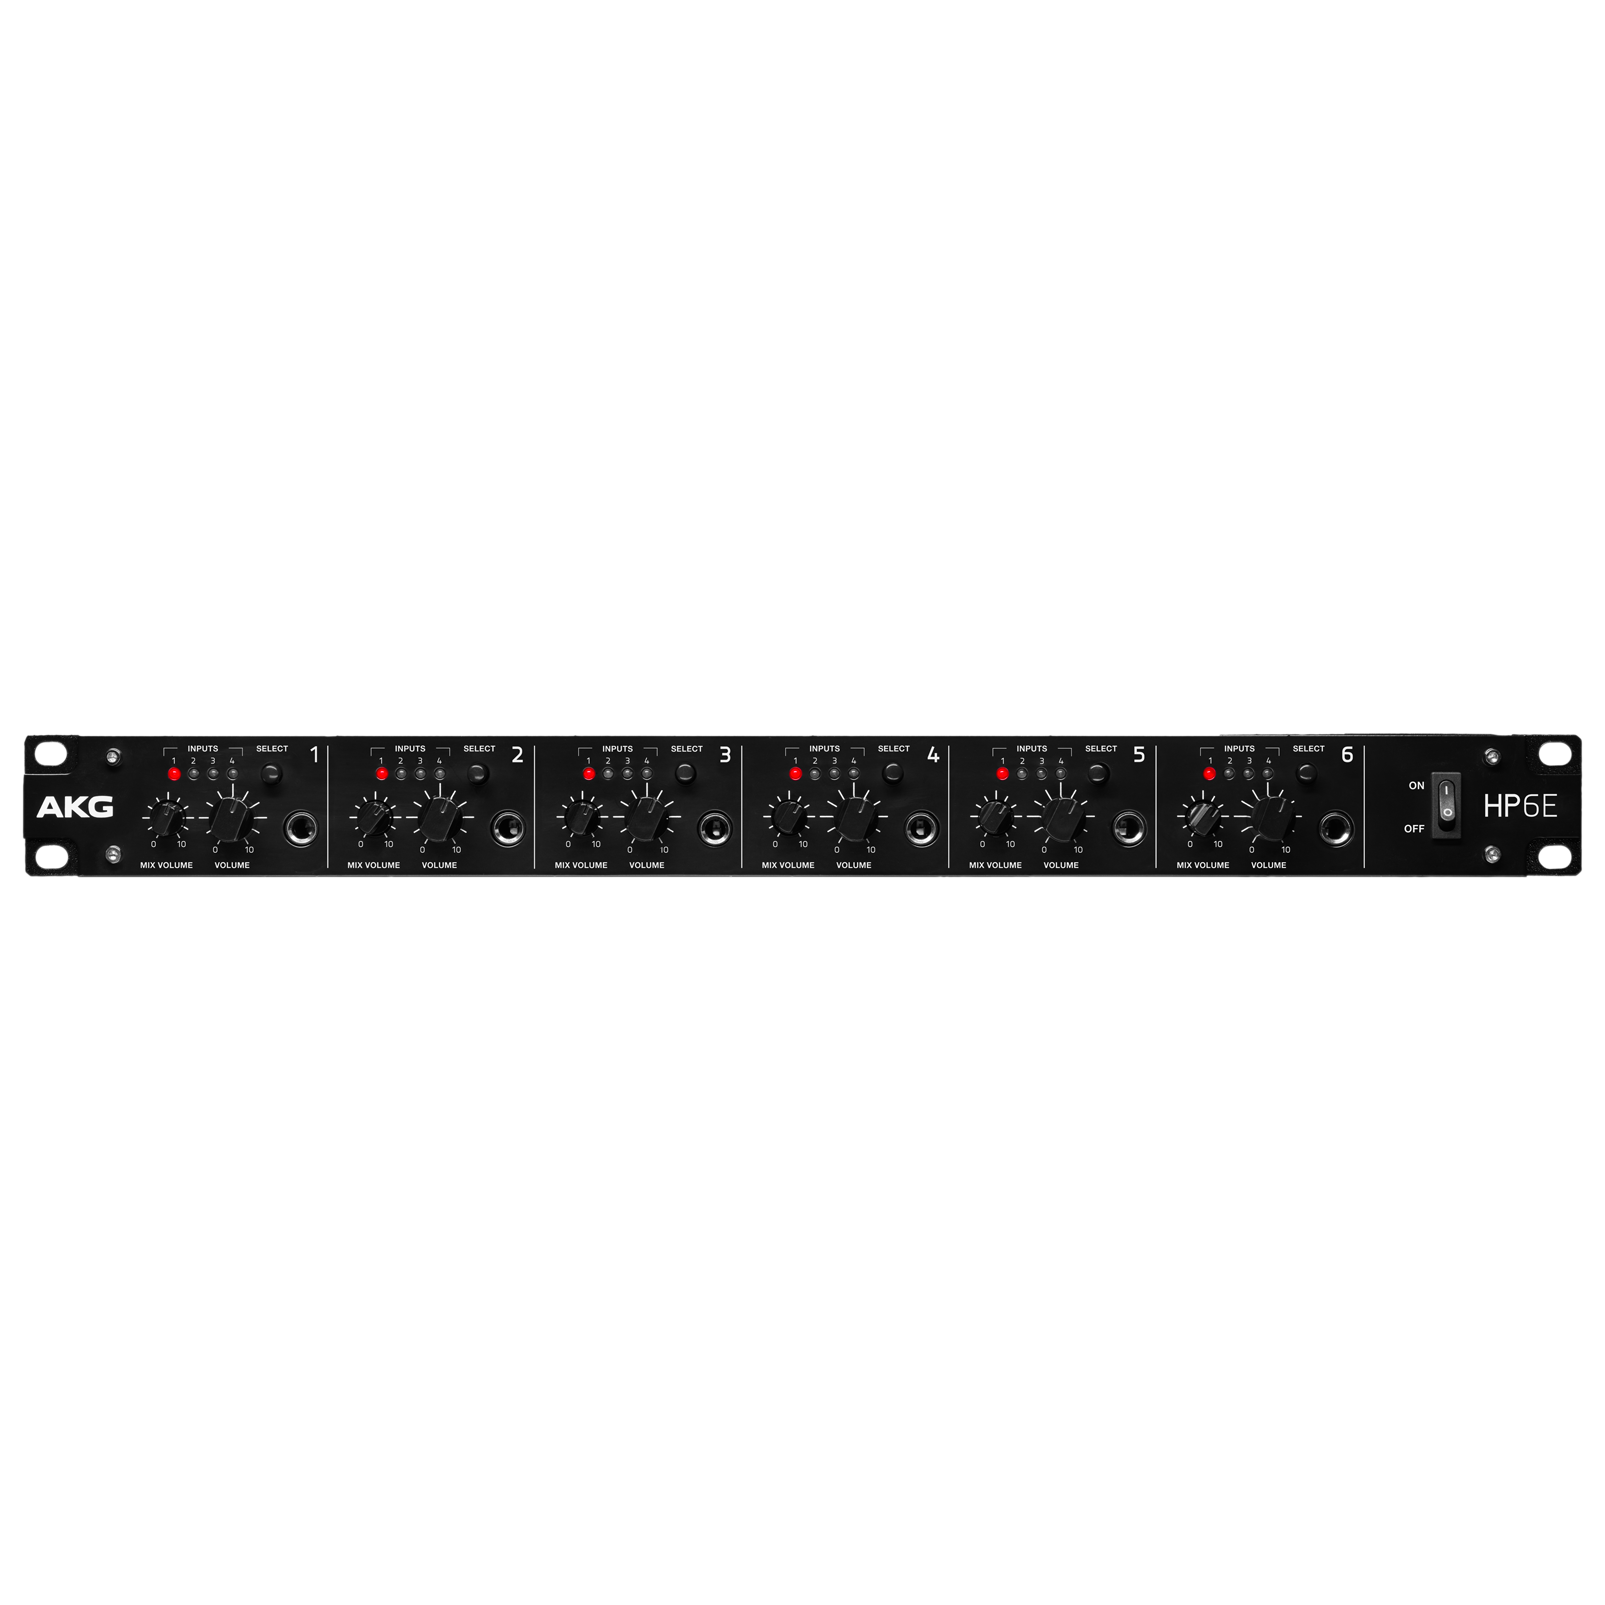 HP6E - Black - 6-channel matrix headphone amplifier - Front